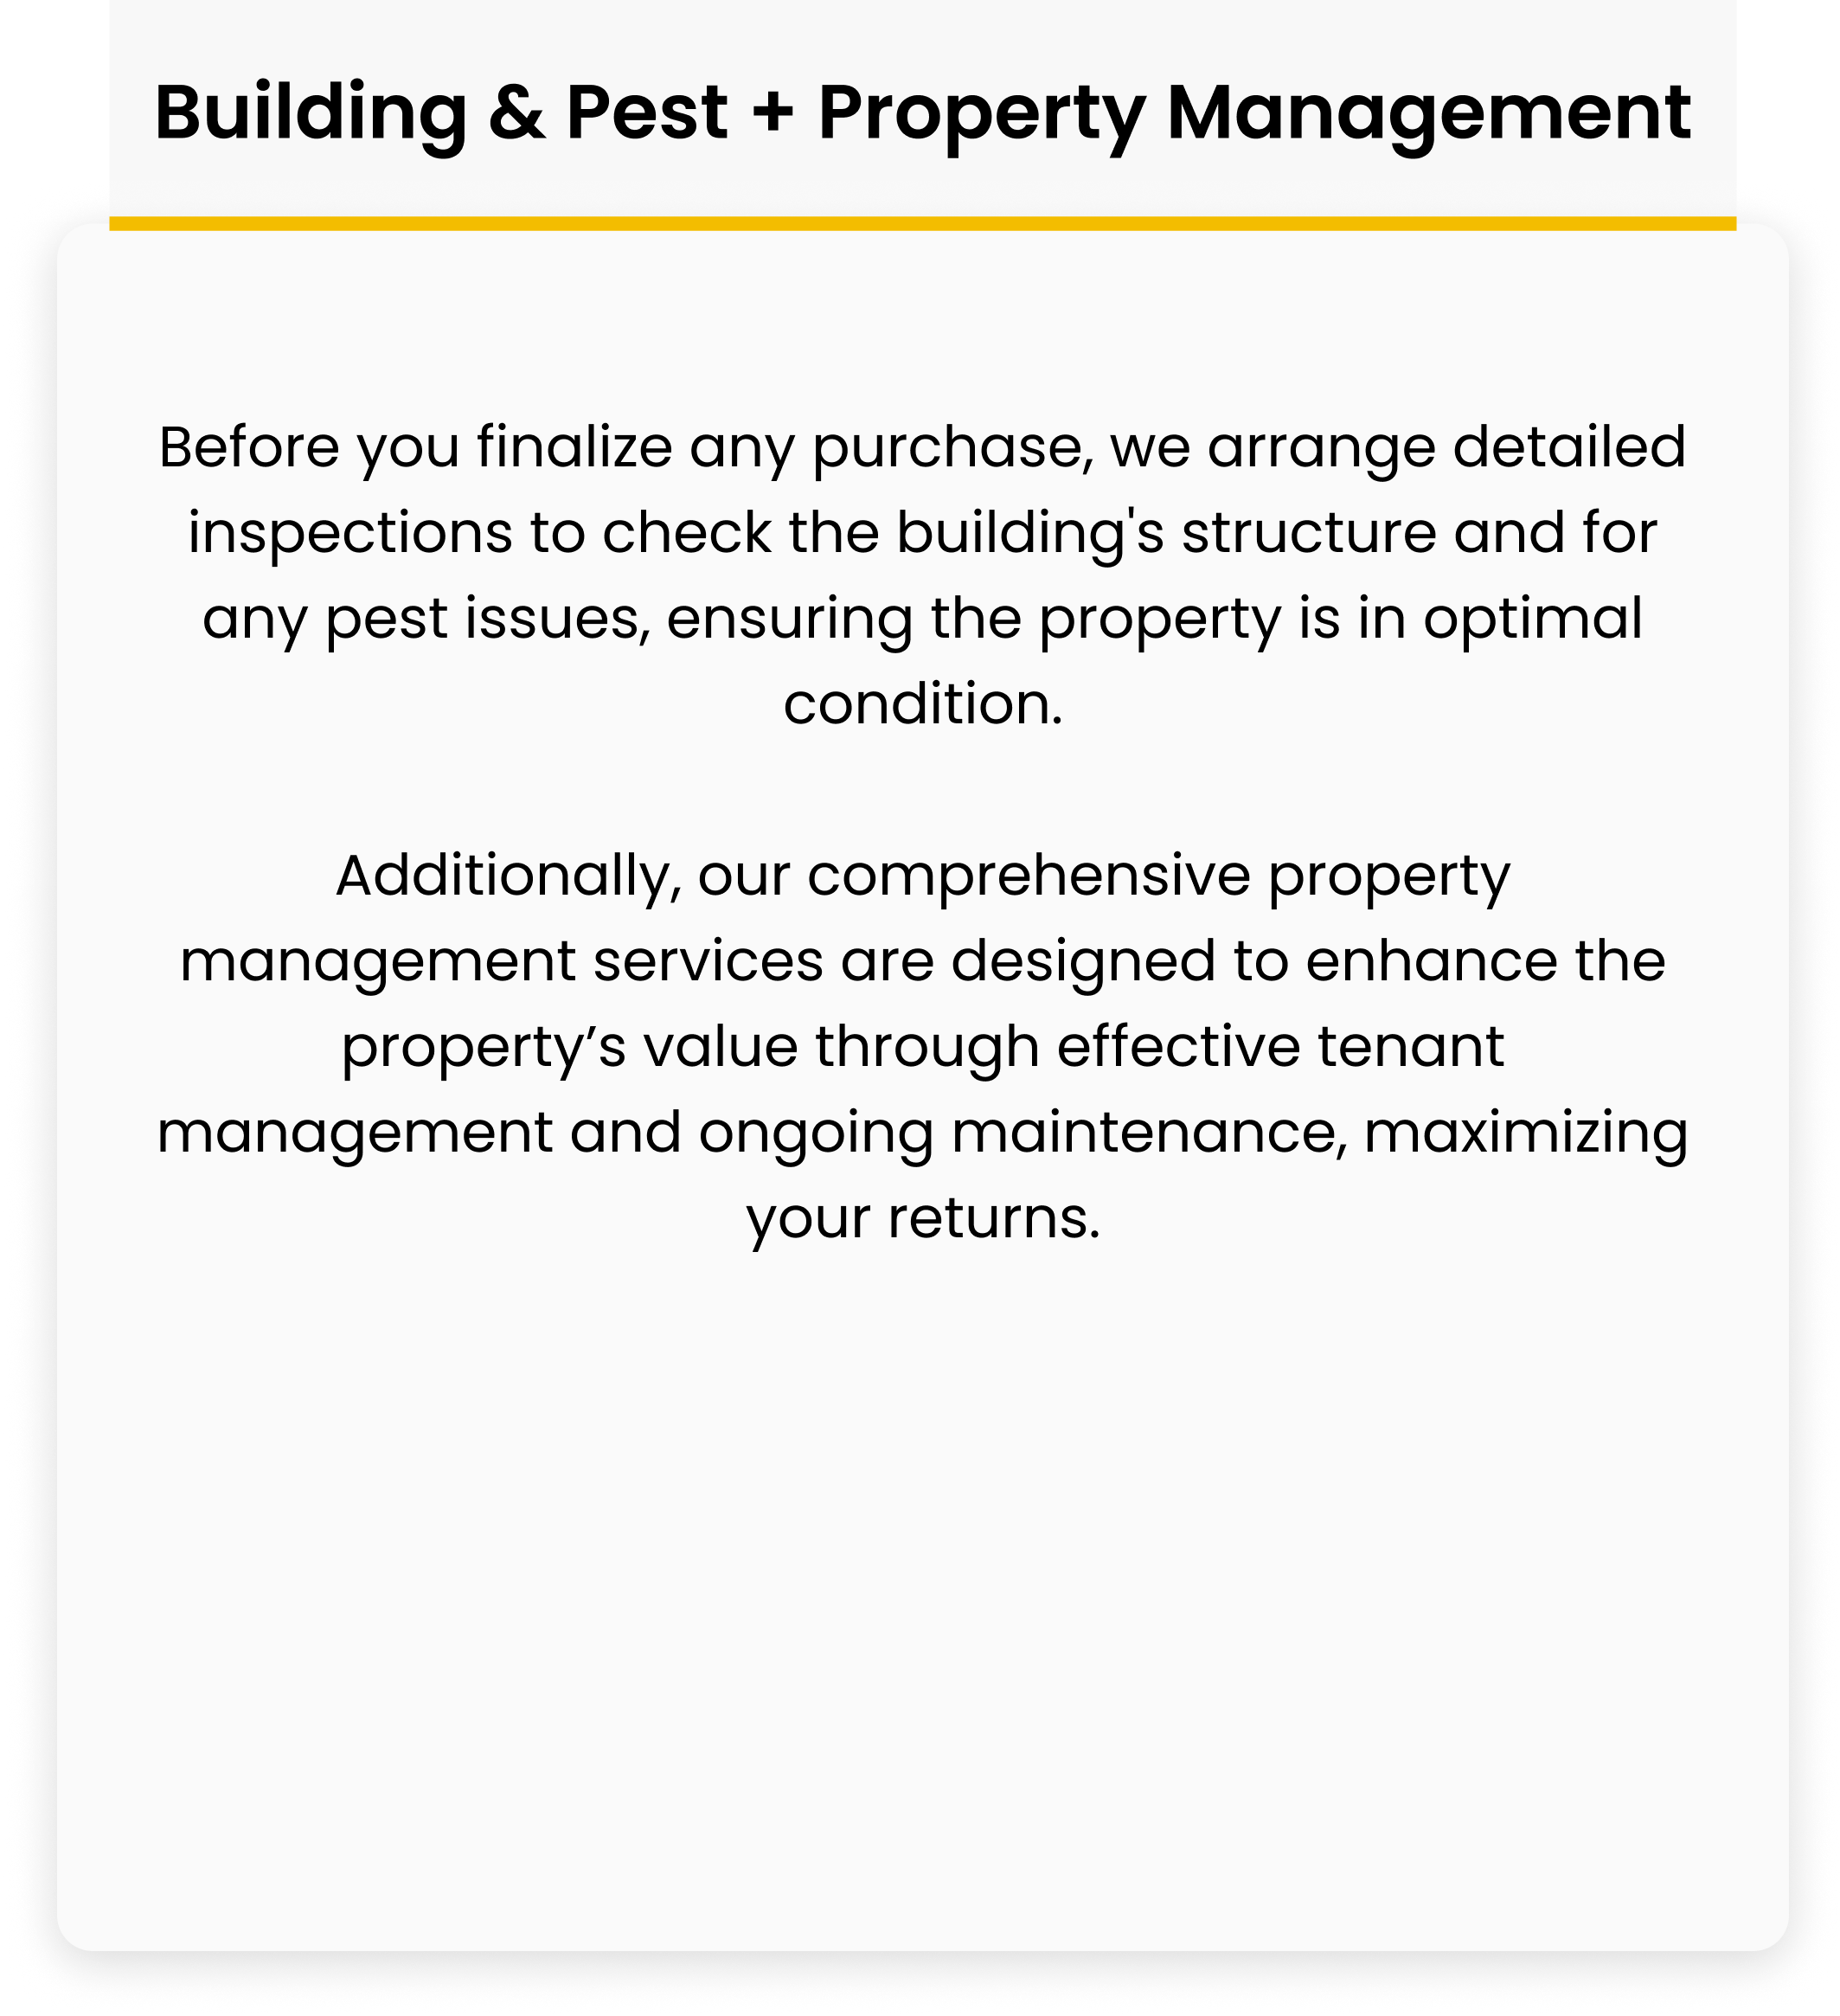 Building & Pest + Property Management